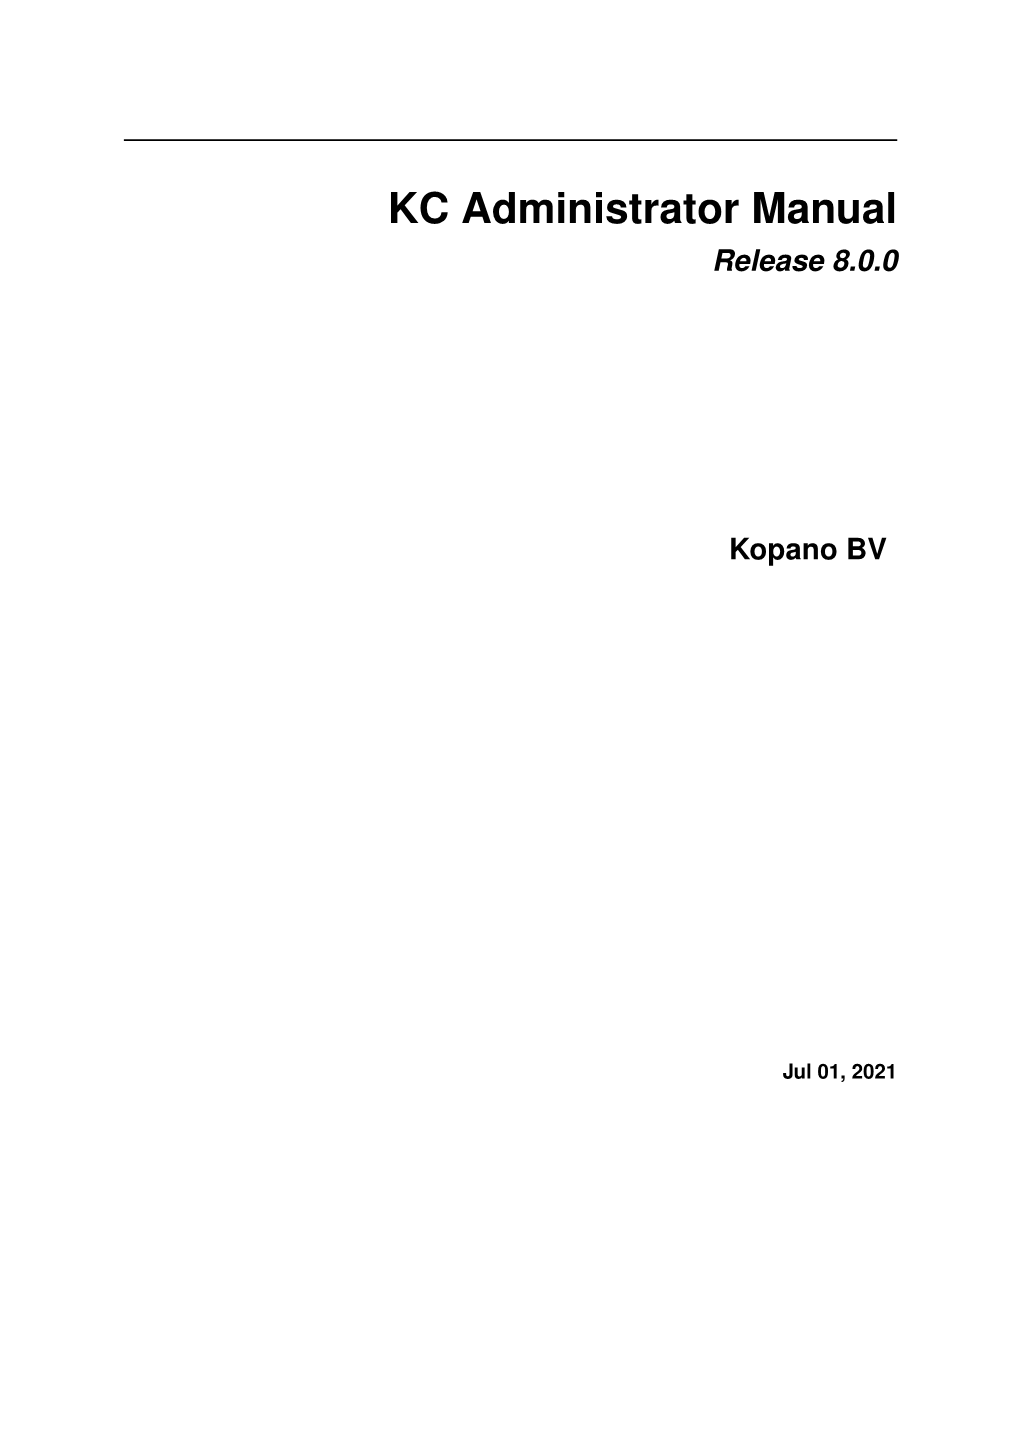 KC Administrator Manual Release 8.0.0